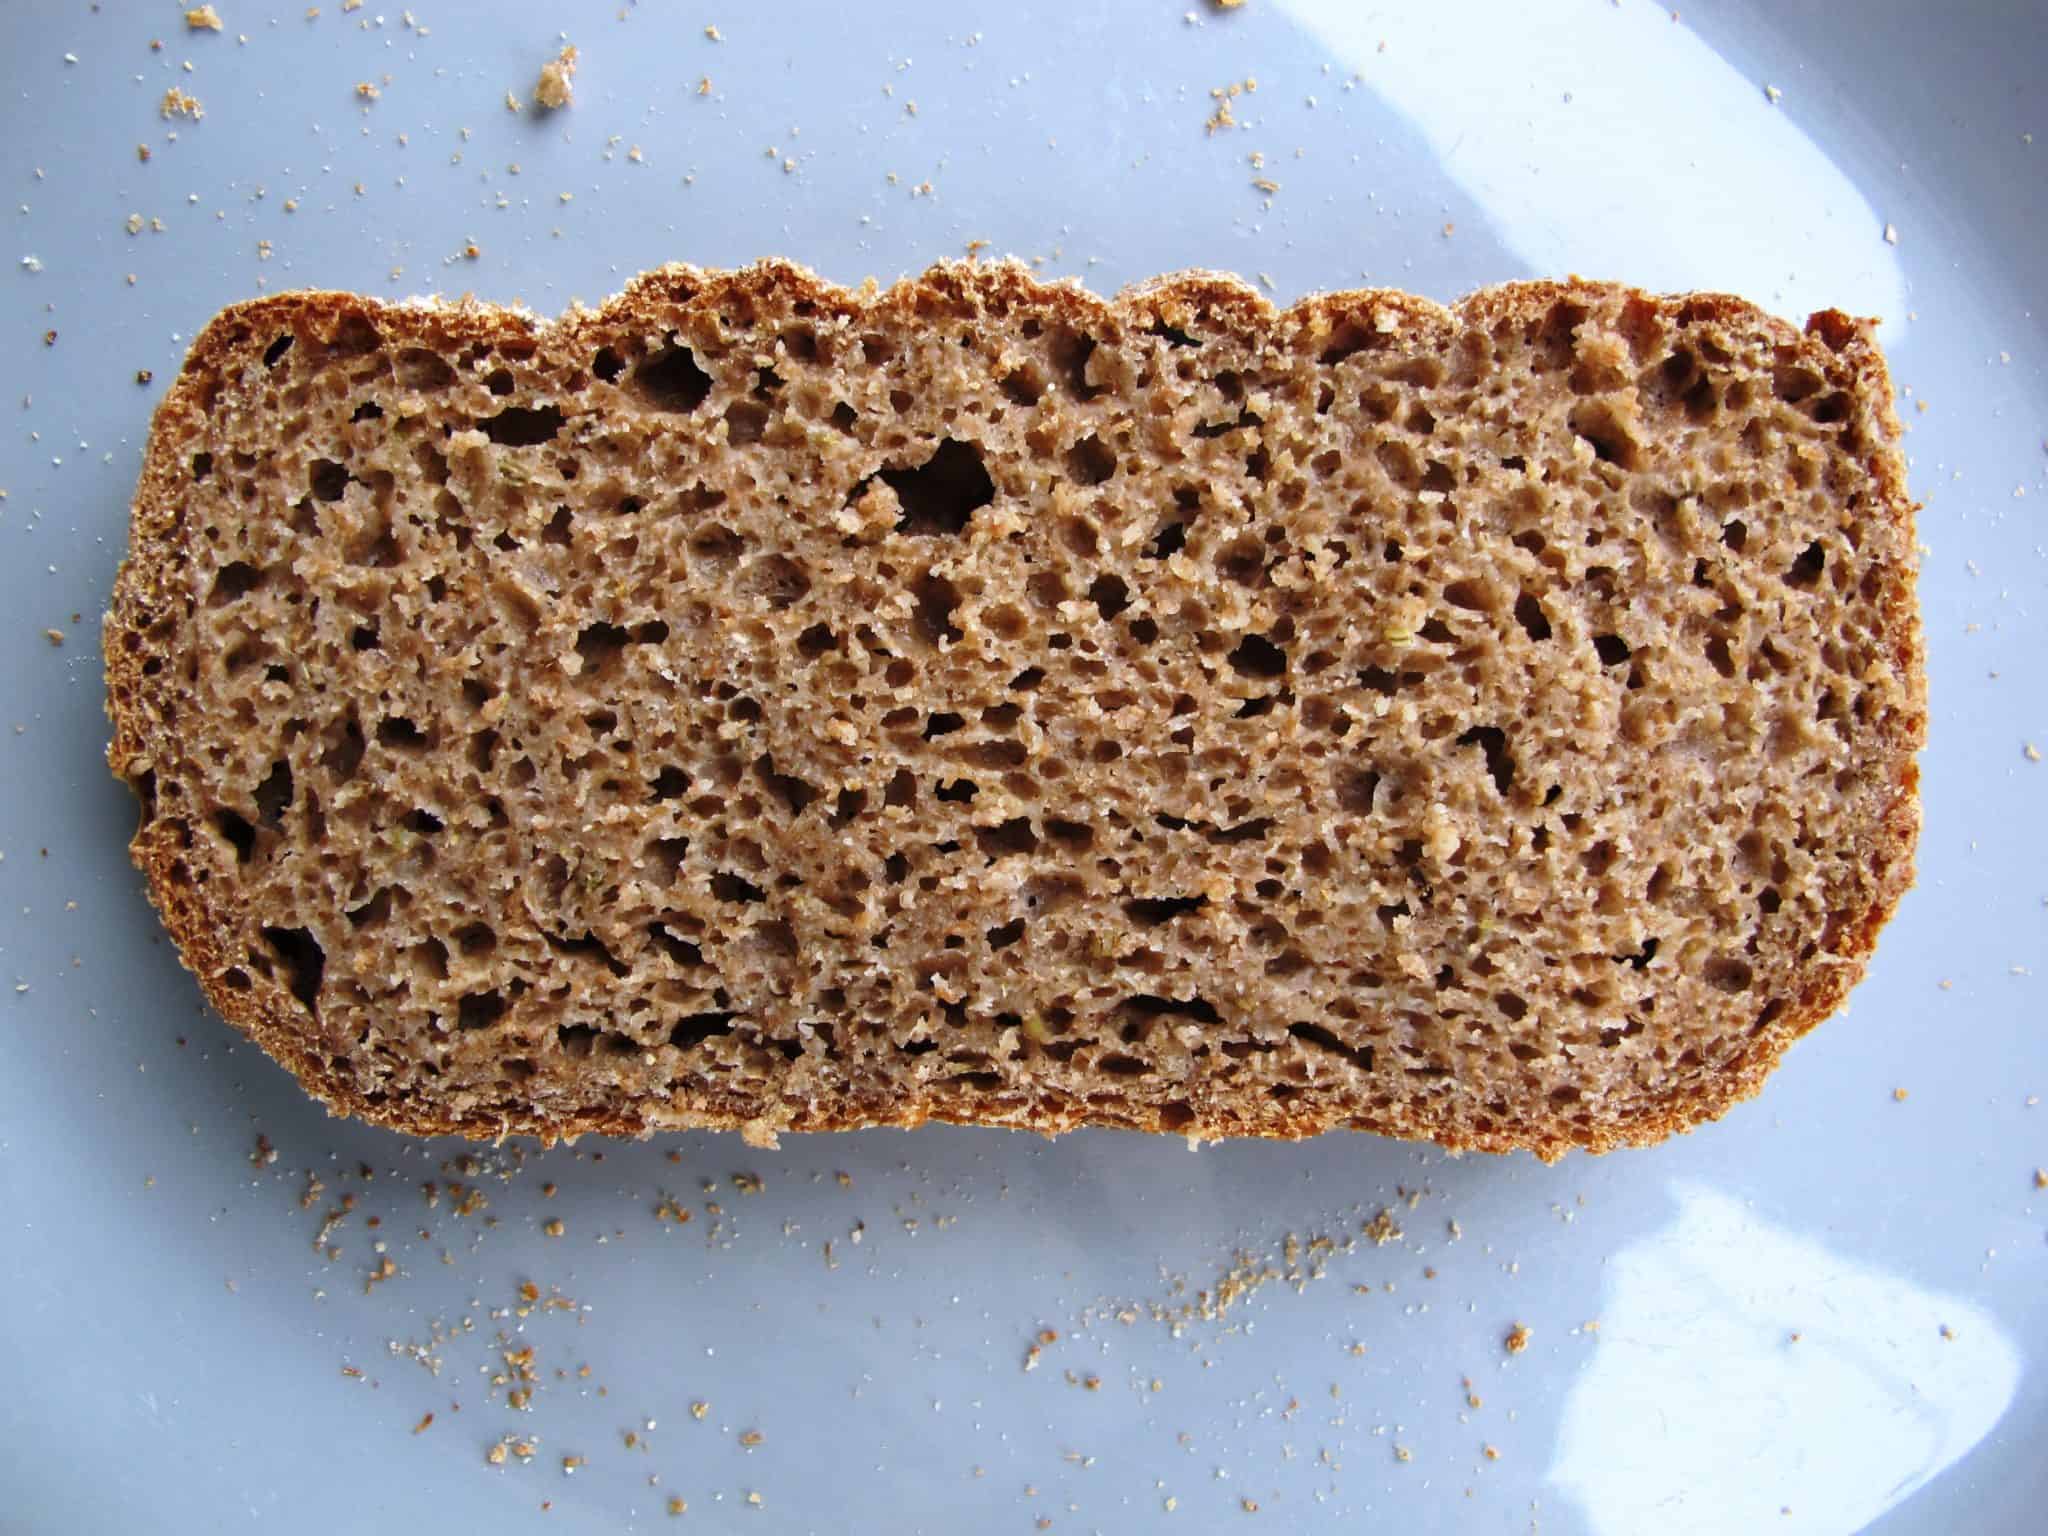 New tool: Lekue Silicone Bread Maker